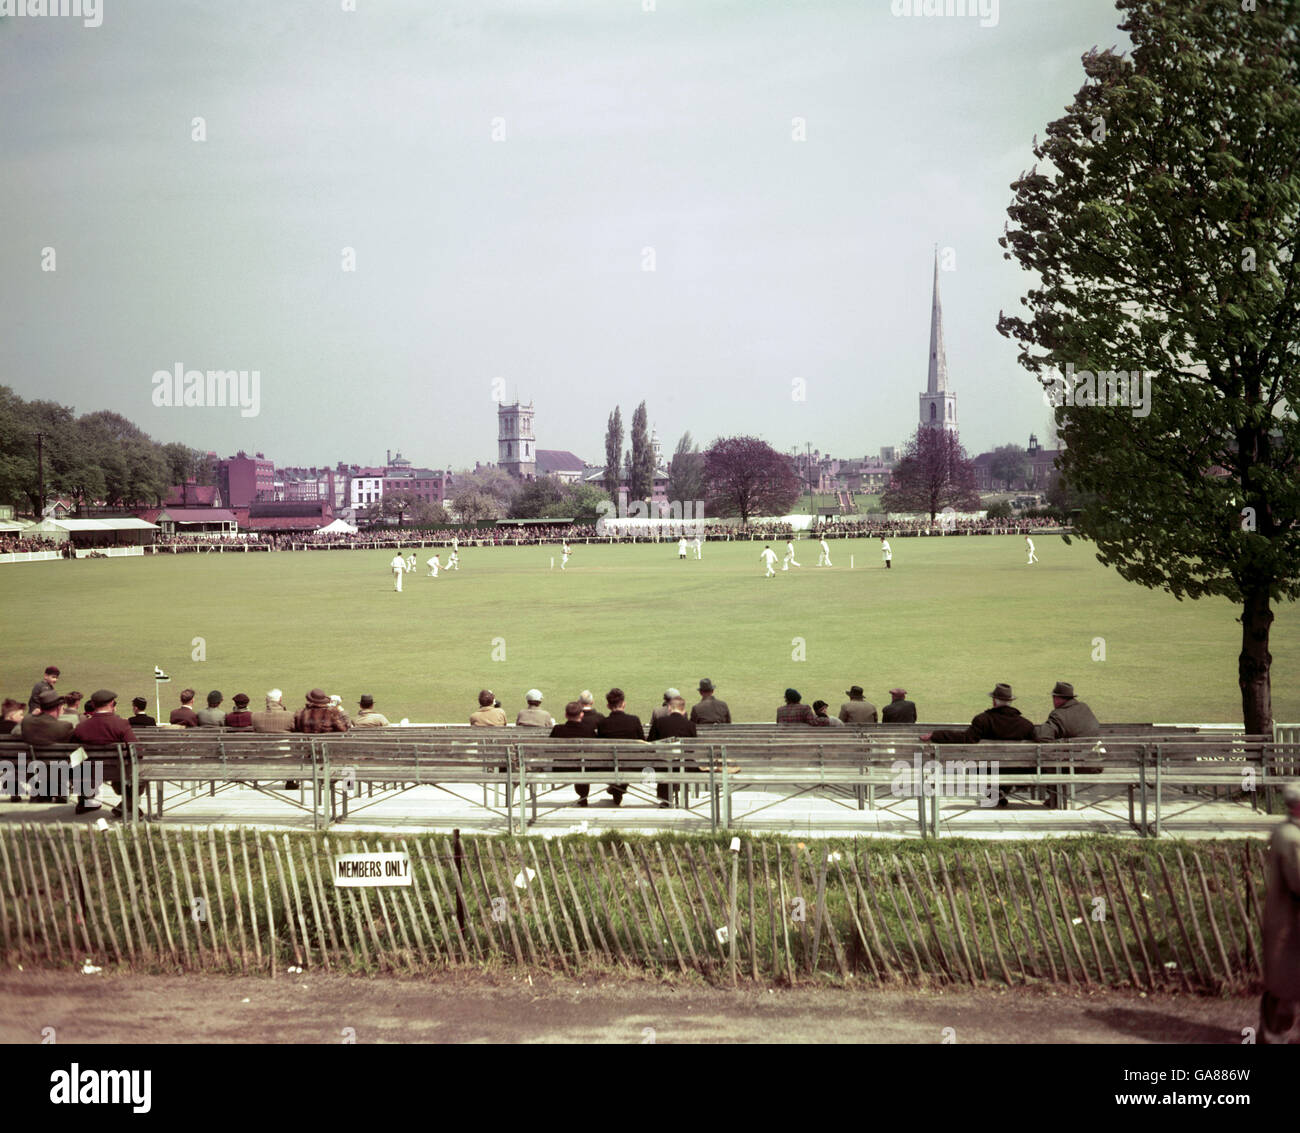 Cricket - Worcestershire County Cricket Club - Photocall. Cricket in Worcester im Jahr 1953. Stockfoto